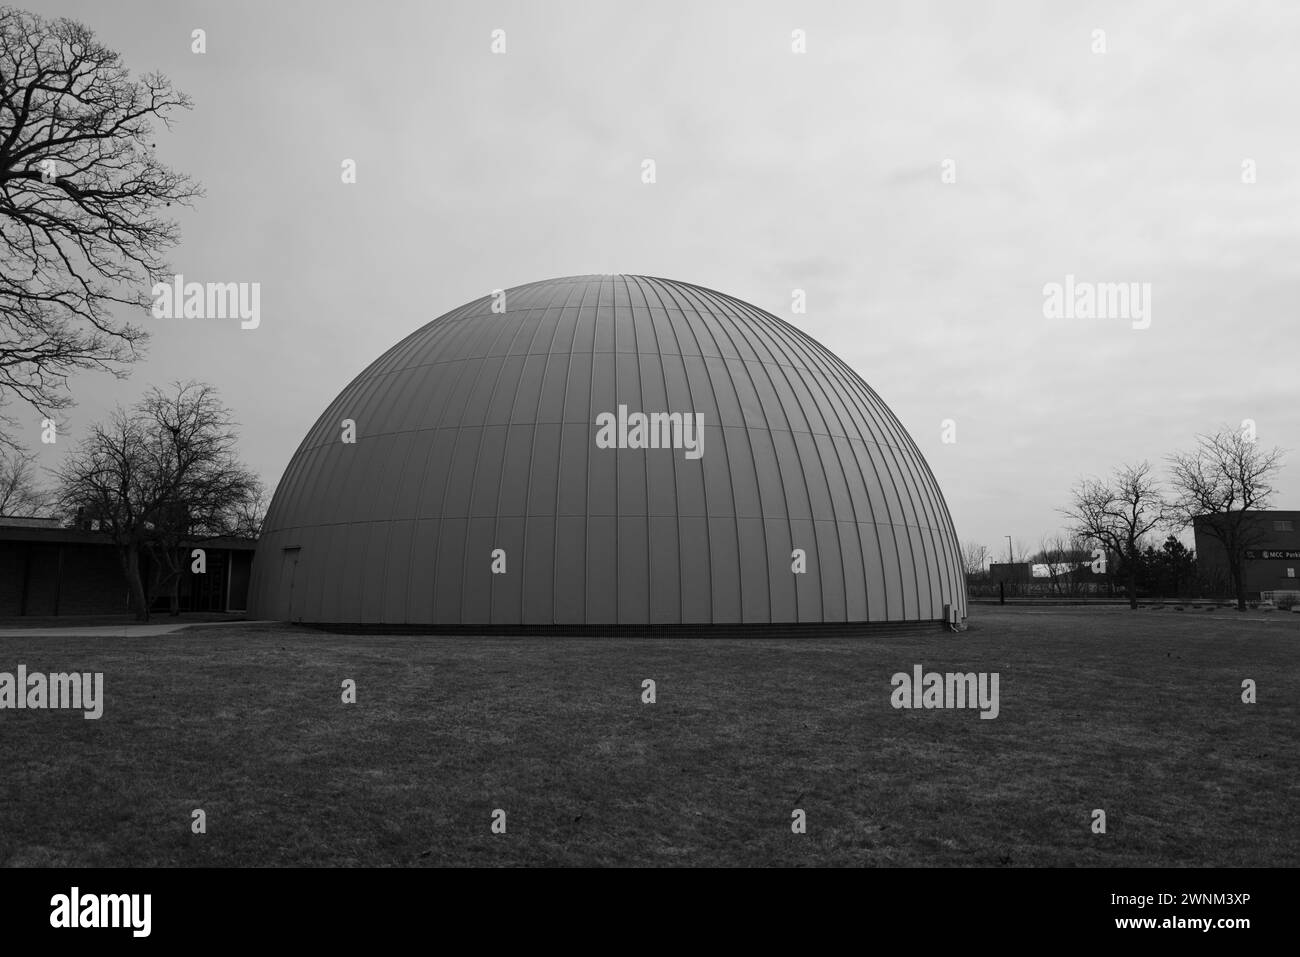 The Longway Planetarium in Flint Michigan USA Stock Photo